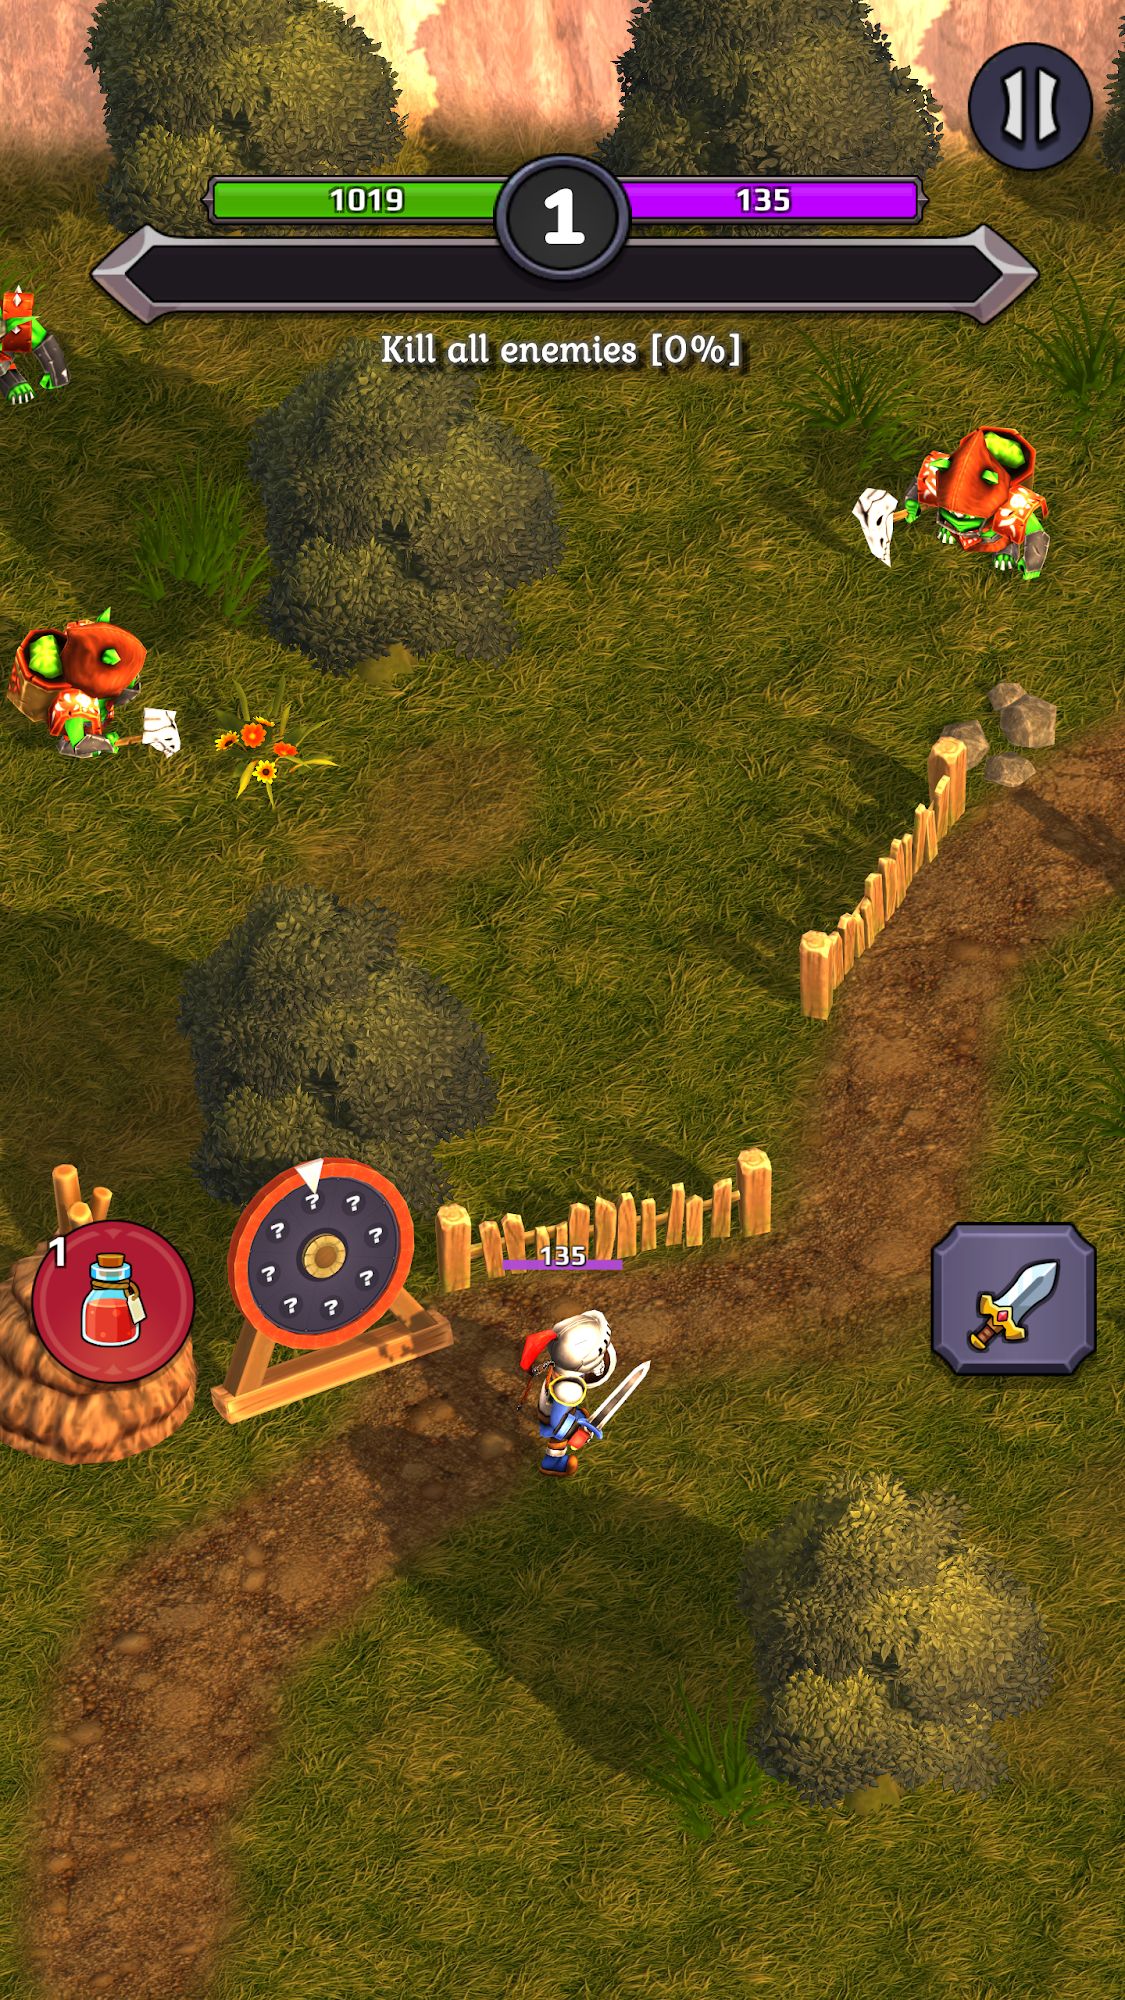 Скачать Crusado: Heroes Roguelike RPG: Android Без интернета игра на телефон и планшет.